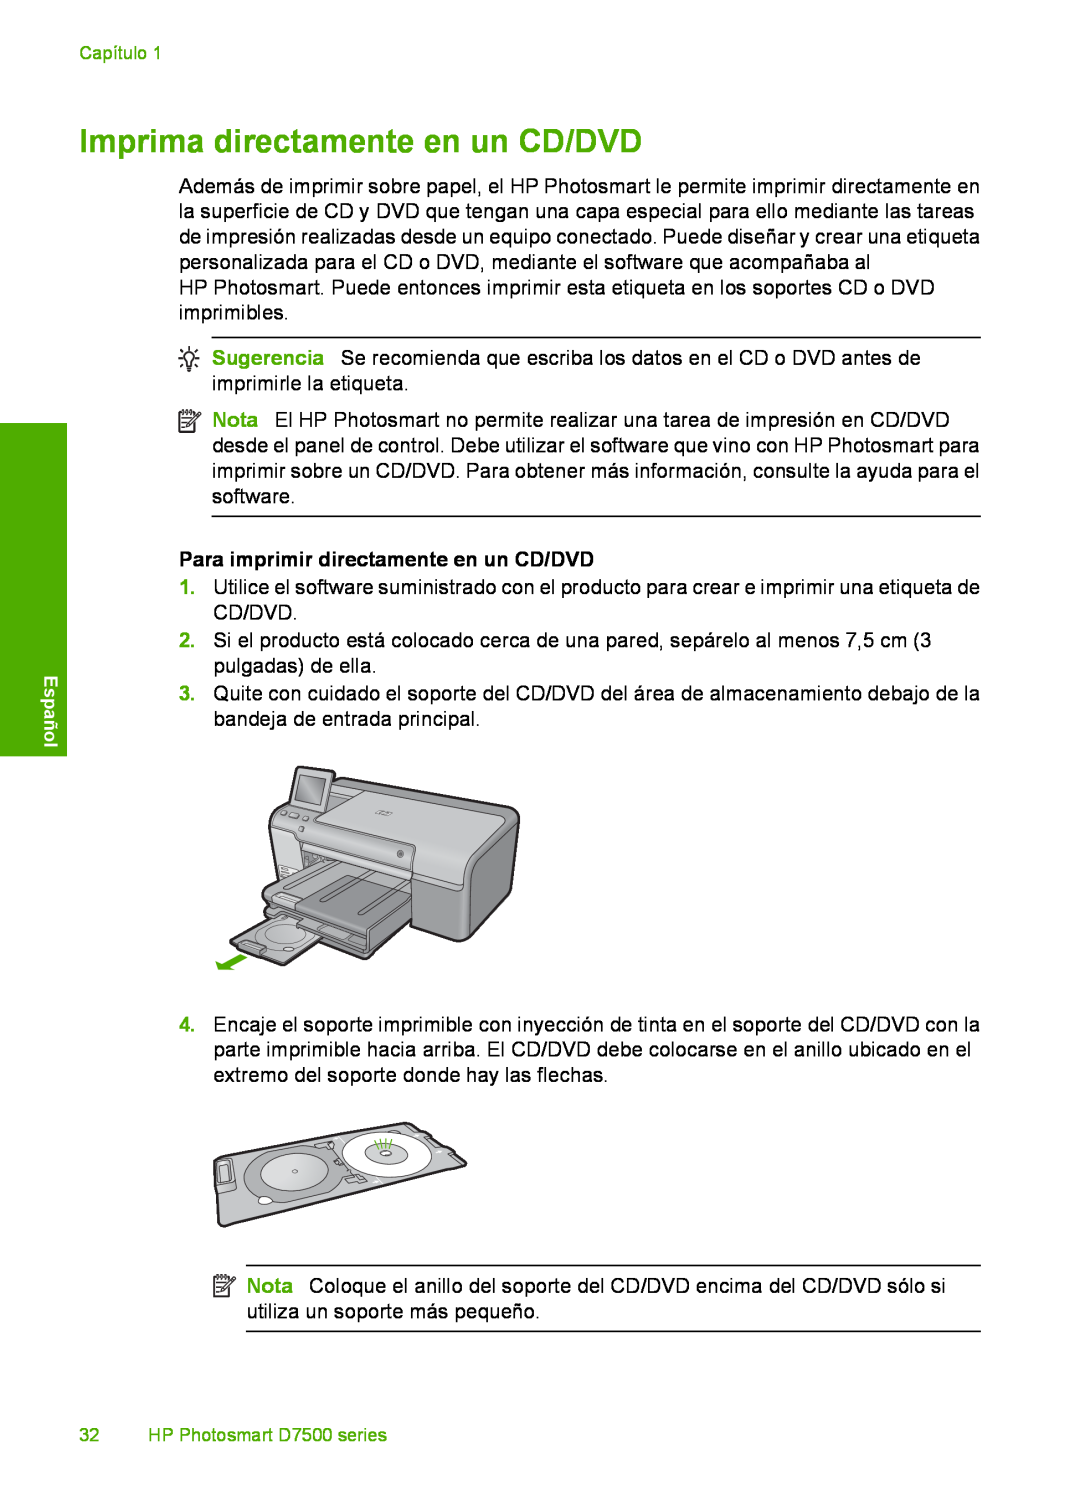 HP D7560 manual Imprima directamente en un CD/DVD, Para imprimir directamente en un CD/DVD 